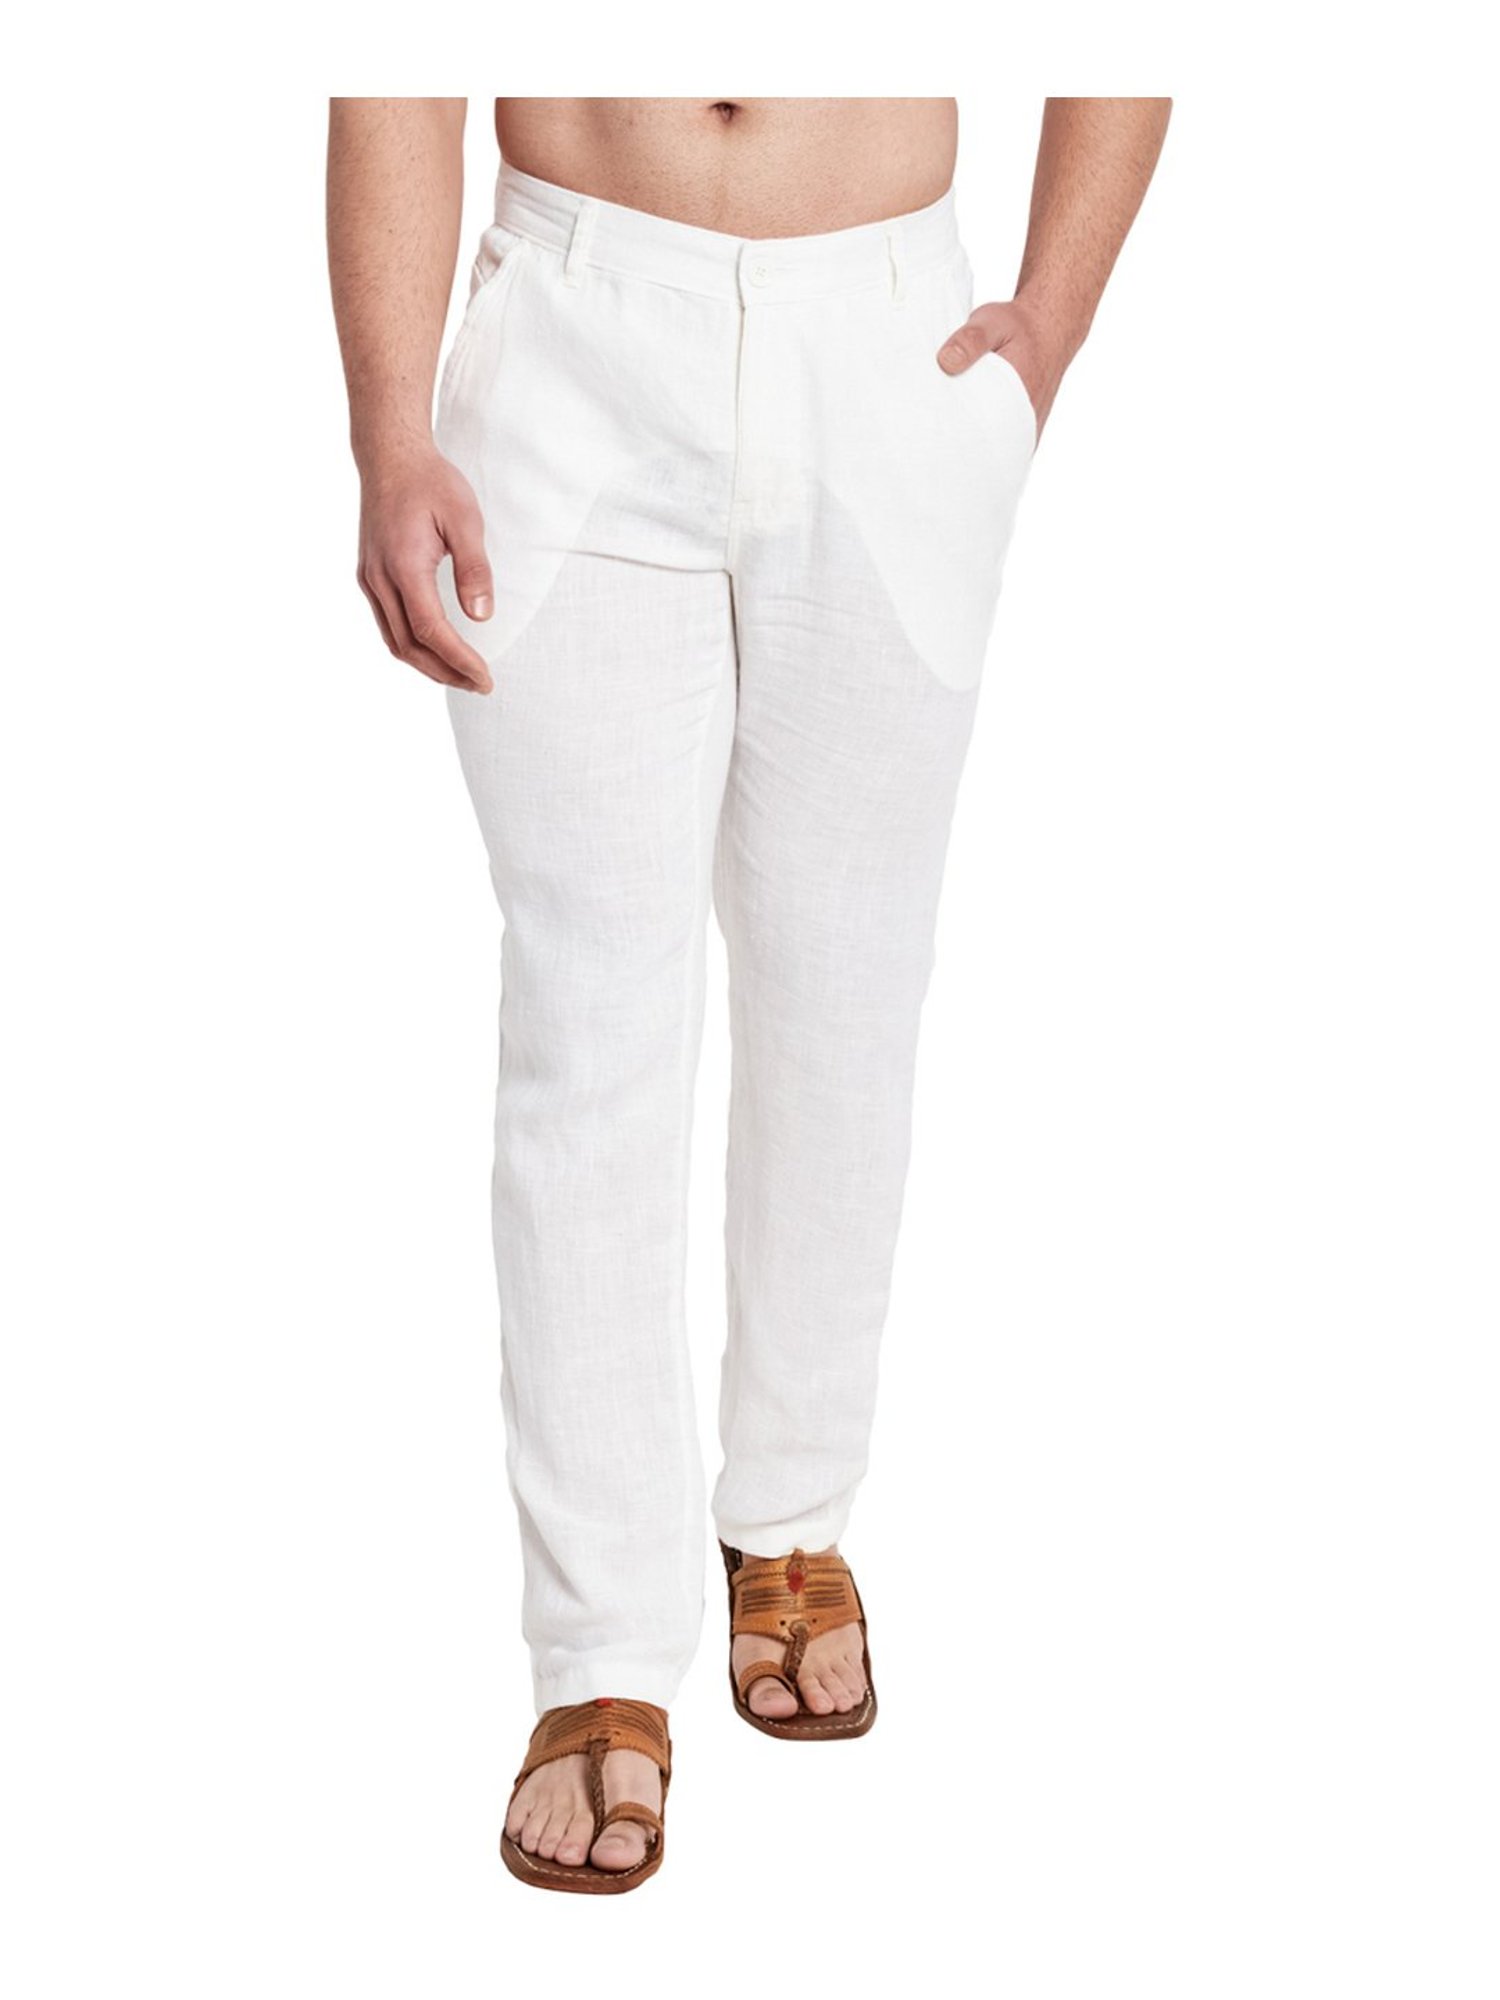 Buy Offwhite Linen Slim Fit Pants for Men Online at Fabindia  10723858